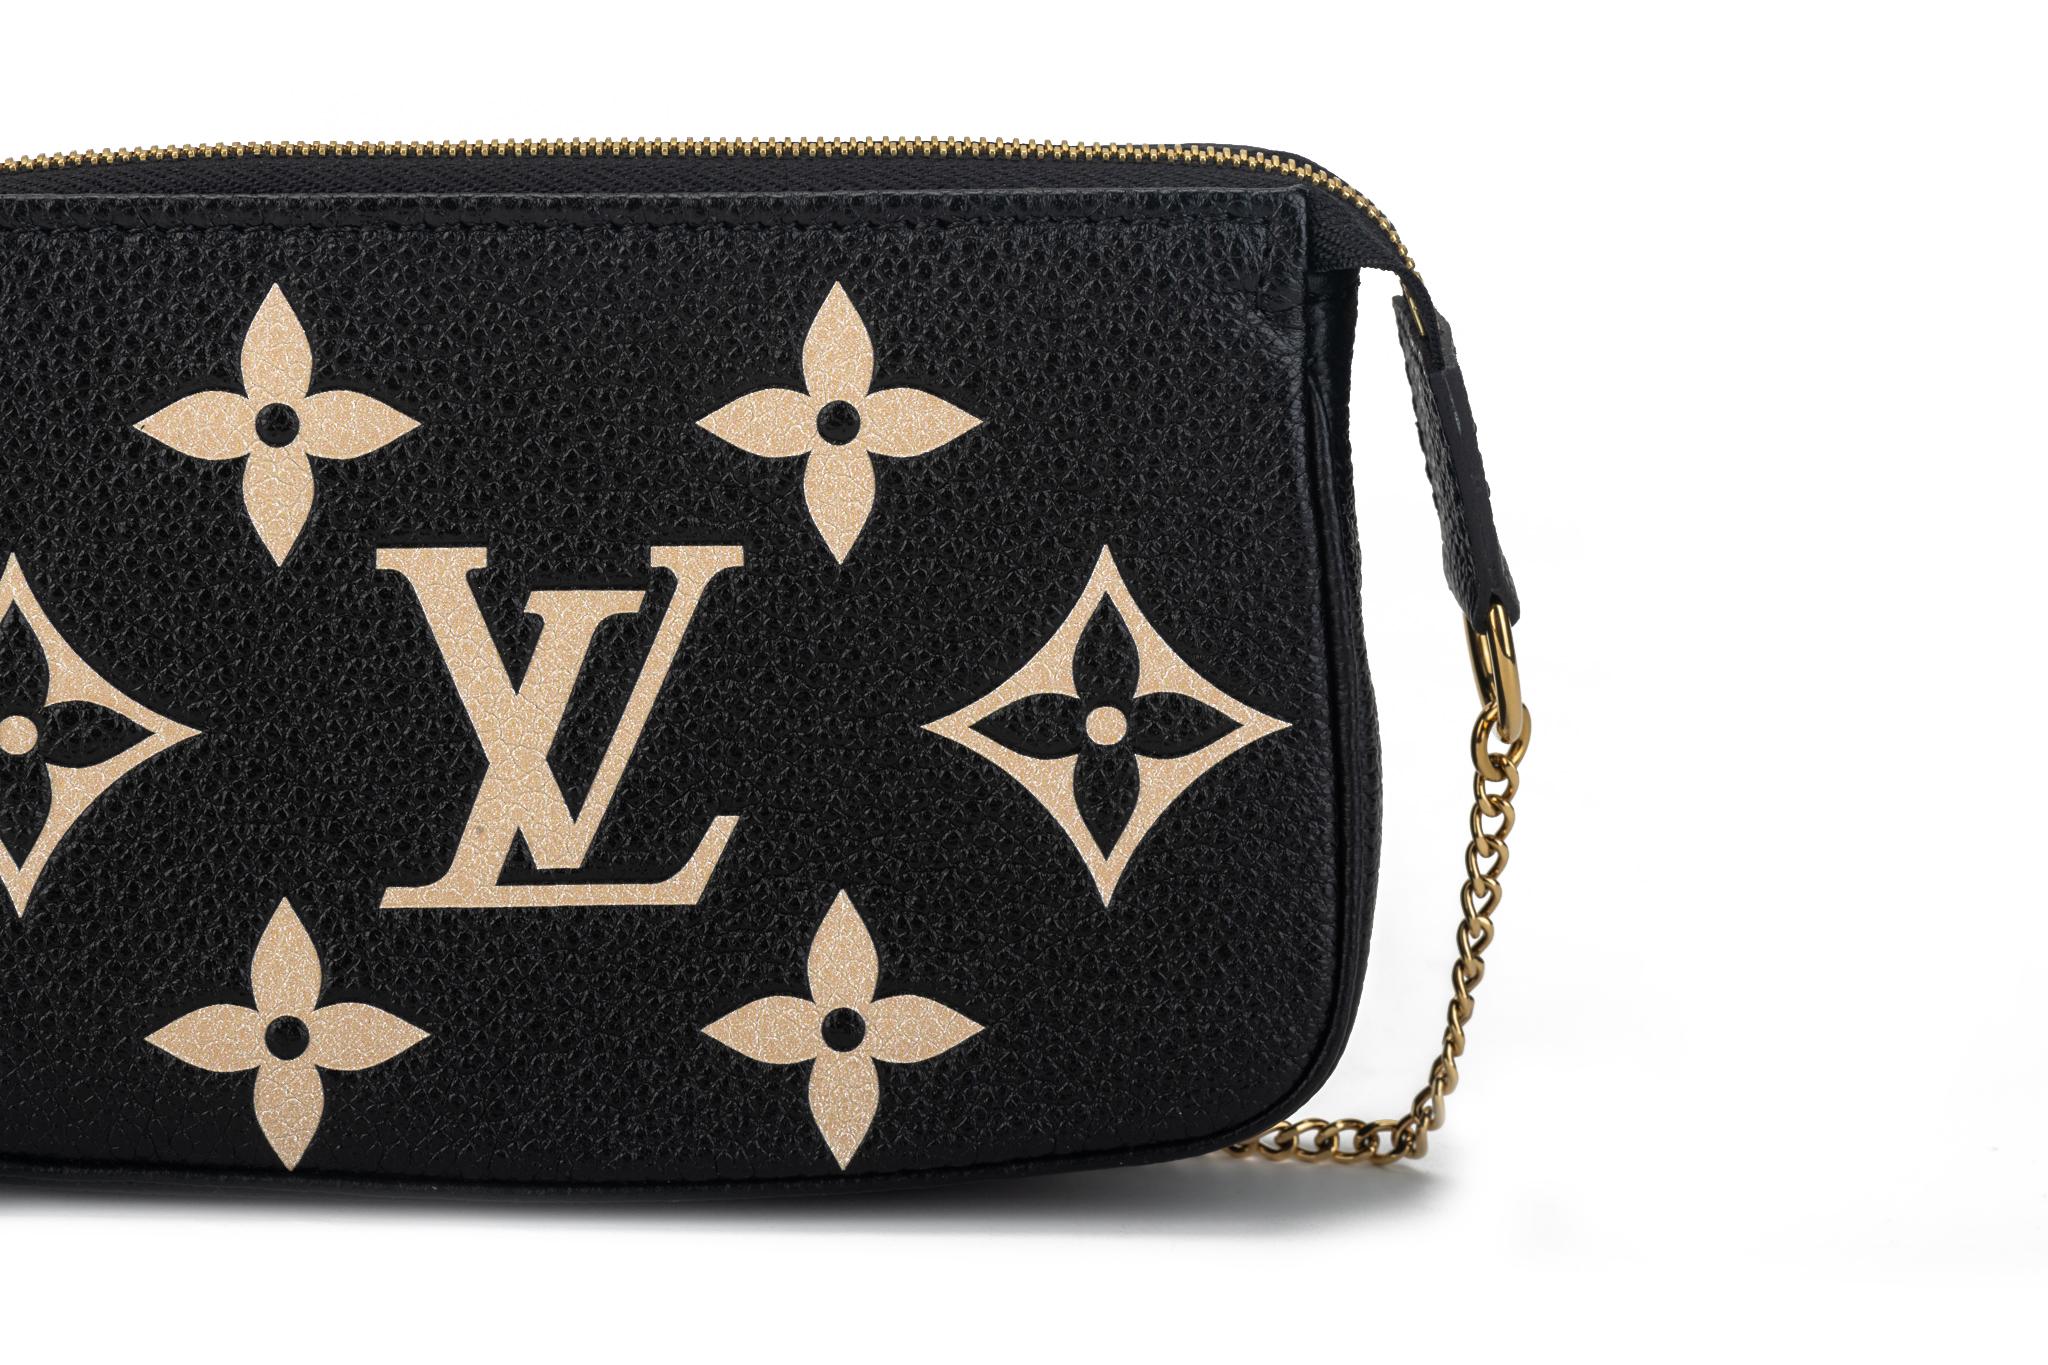 Women's New Louis Vuiton Black Embossed Mini Pochette Bag